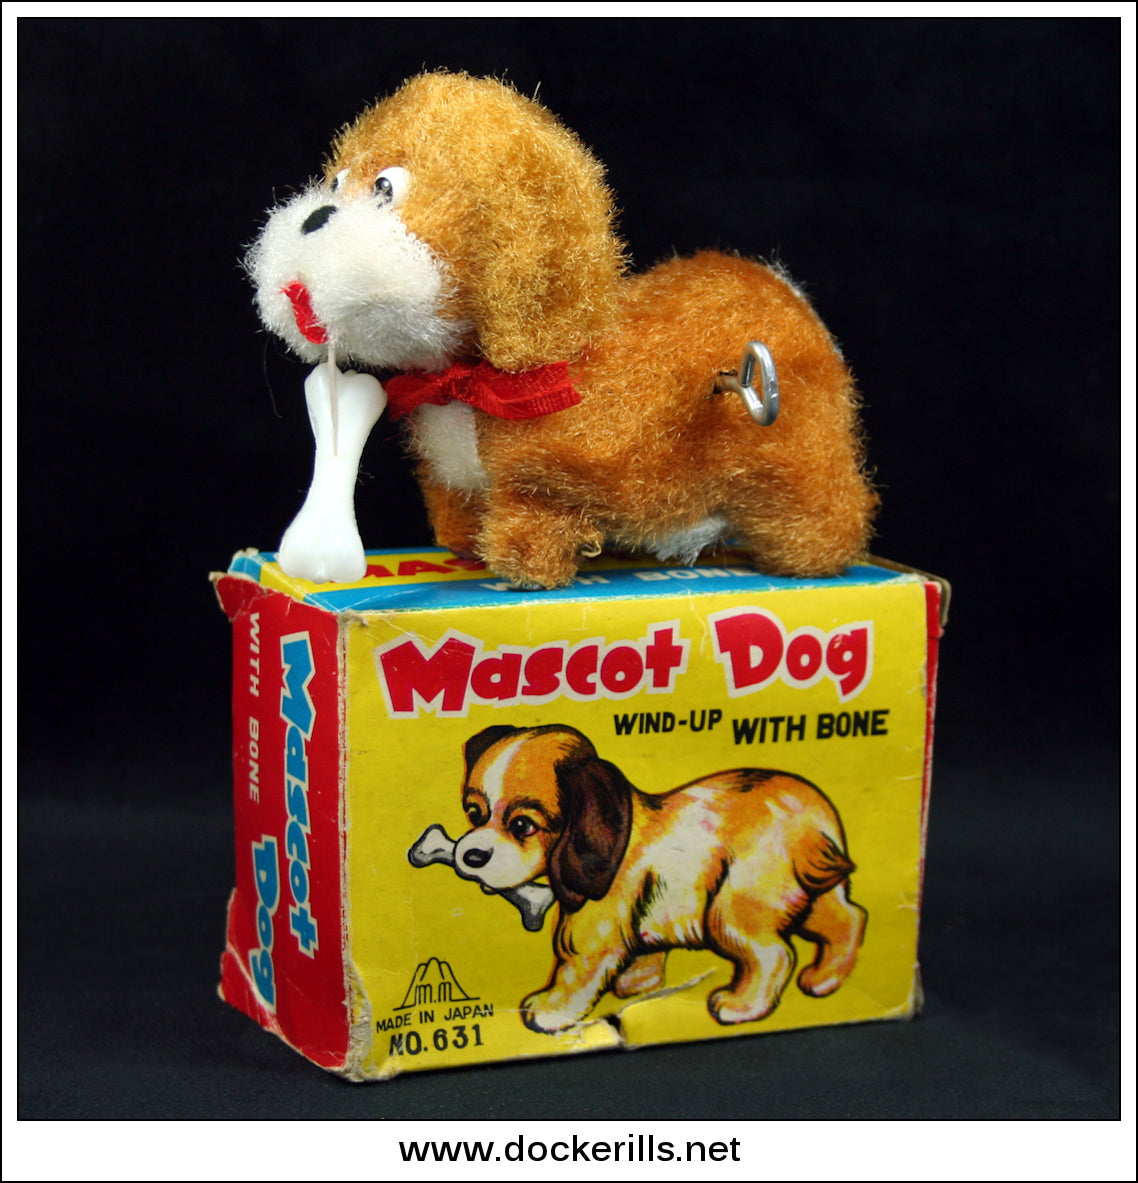 Mascot Dog With Bone. Clockwork / Wind-Up Plush Covered Novelty Toy, Fuji  Press Kogyo, Japan. No. 631.